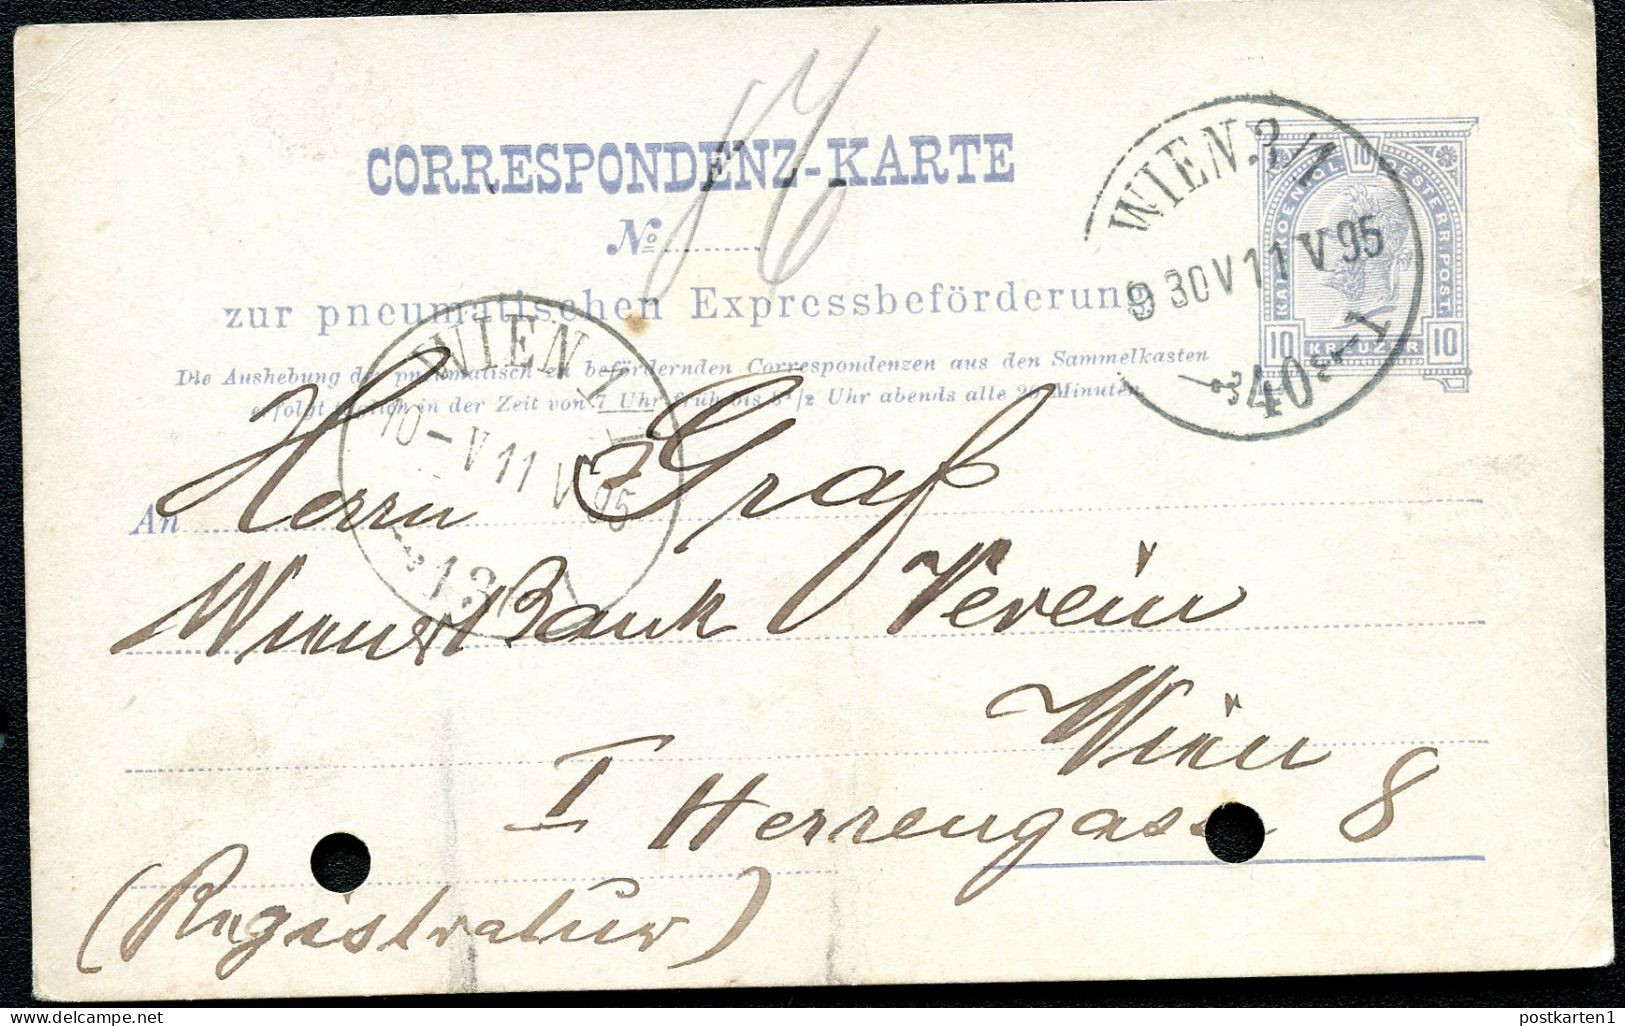 Rohrpost-Postkarte RP14bI Wien 3/1 1894 Kat.10,00€ - Tarjetas